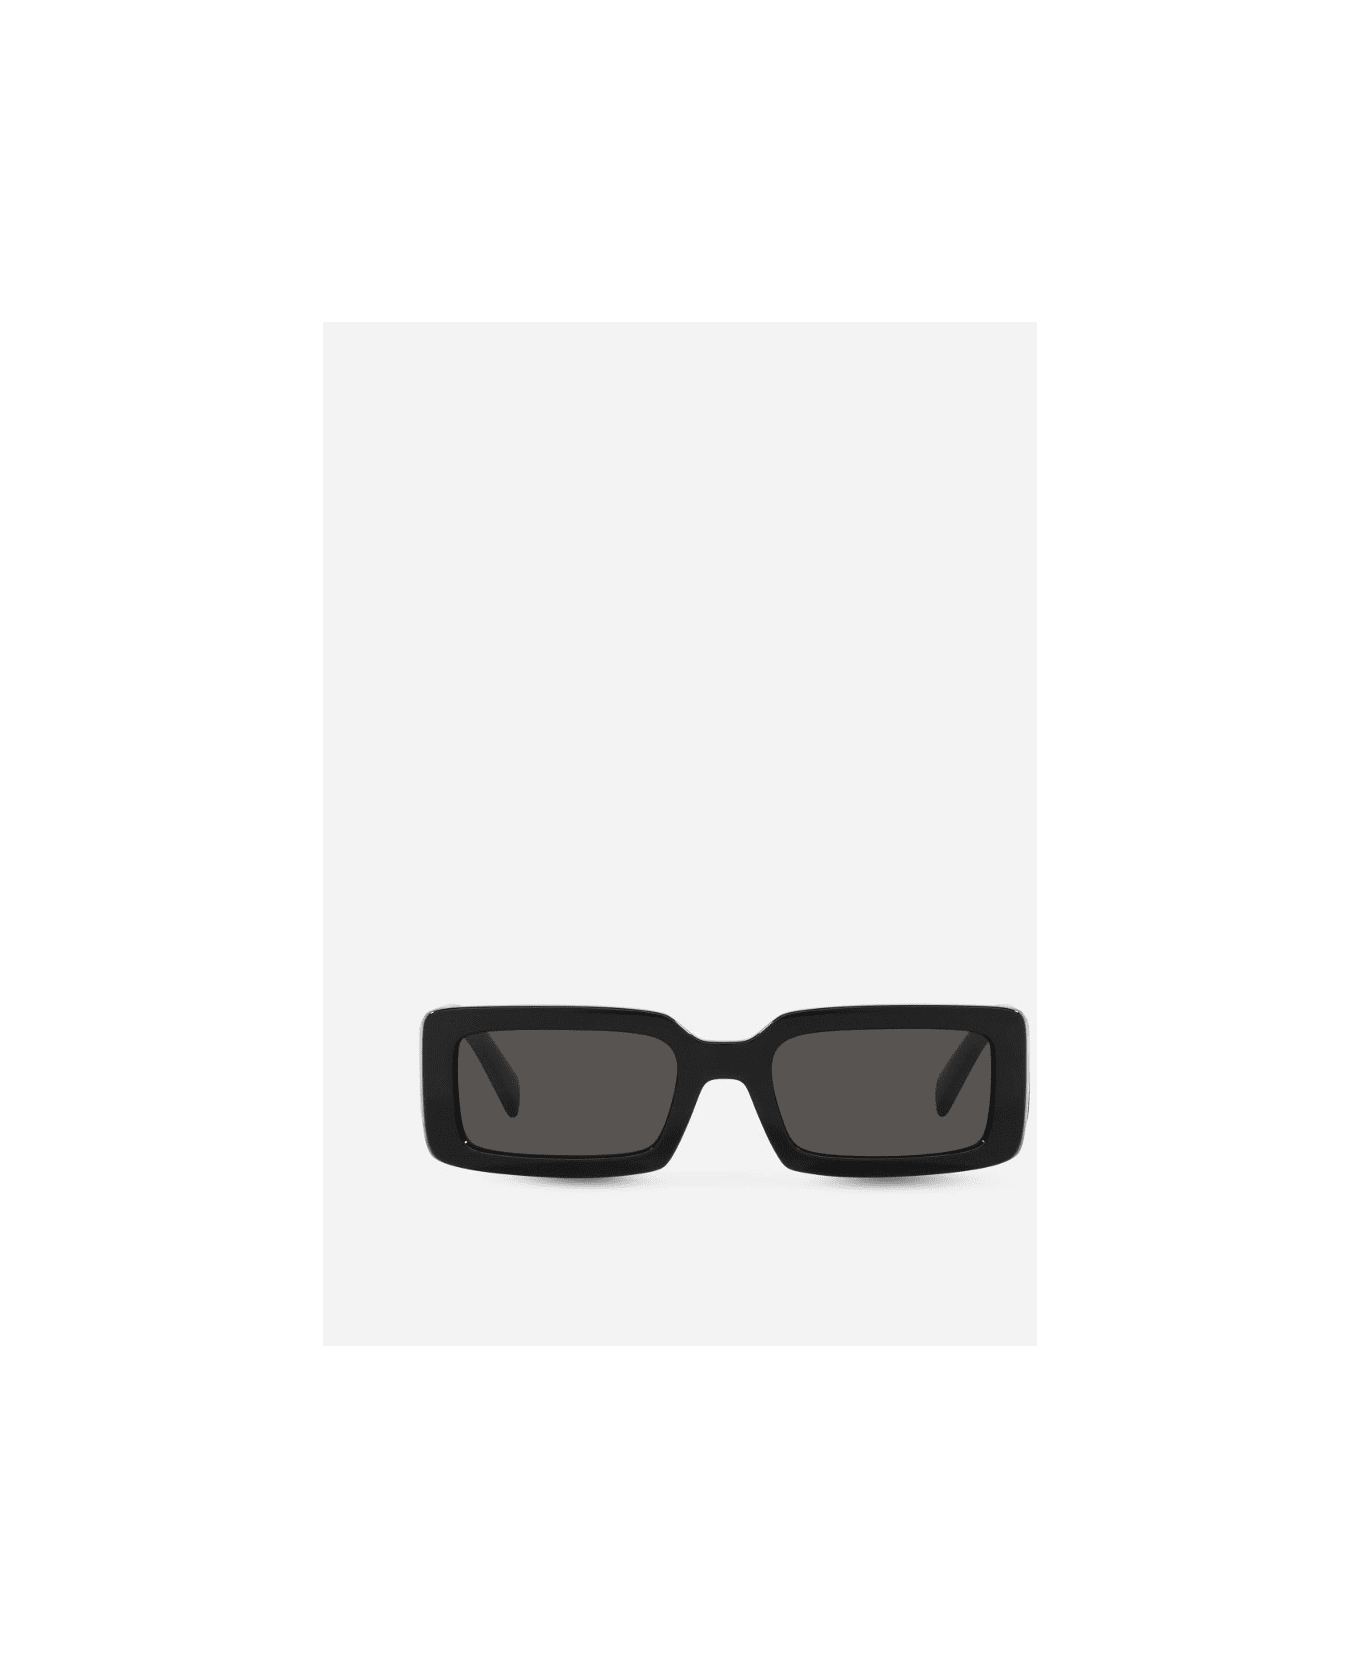 Dolce & Gabbana Eyewear DG6187/s 501/87 Sunglasses - Nero サングラス